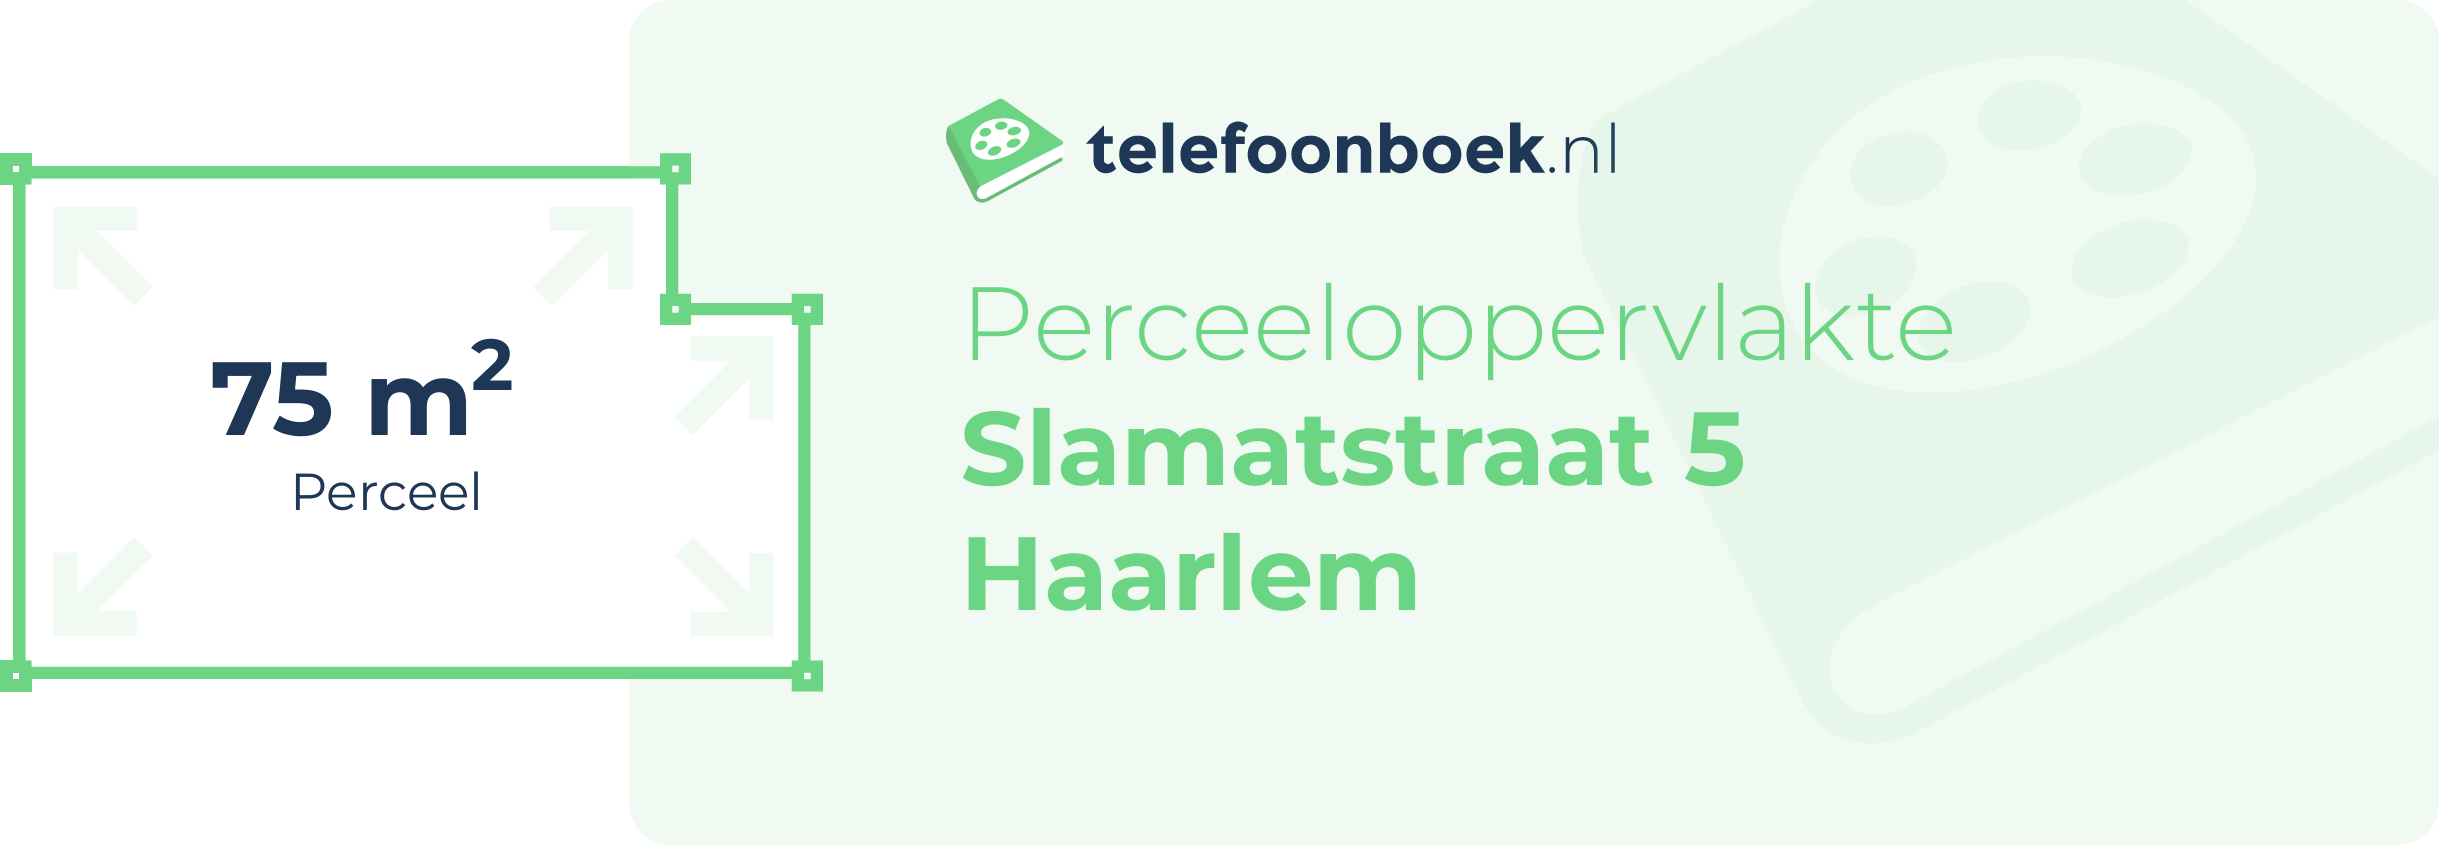 Perceeloppervlakte Slamatstraat 5 Haarlem